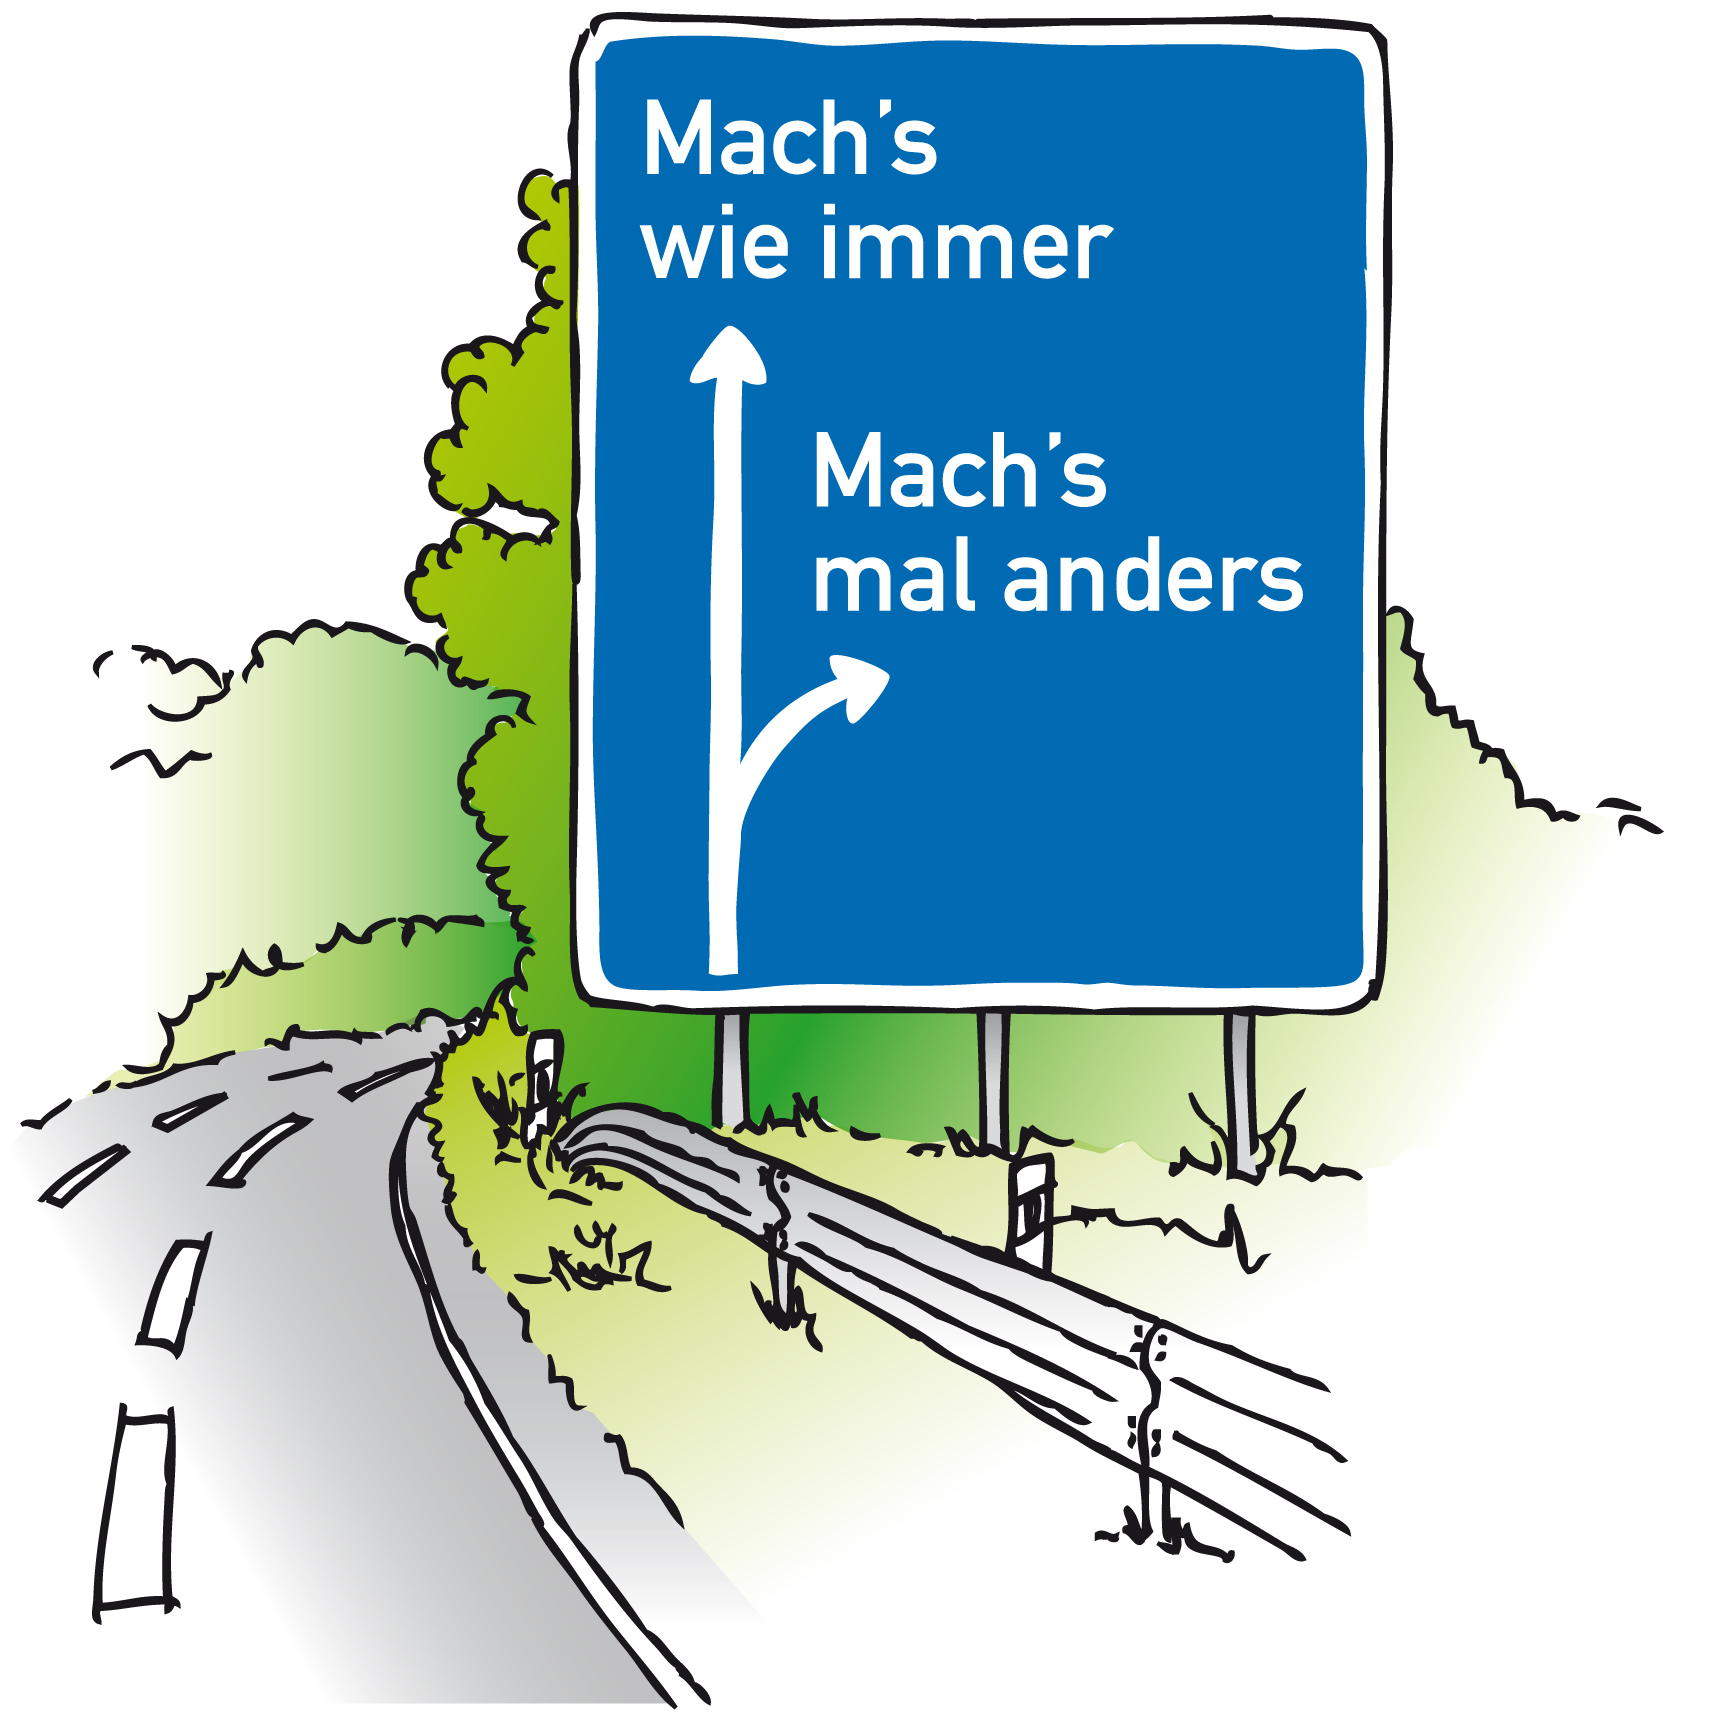 Mach's mal anders (c) Sarah Frank, Factum/ADP In: Pfarrbriefservice.de